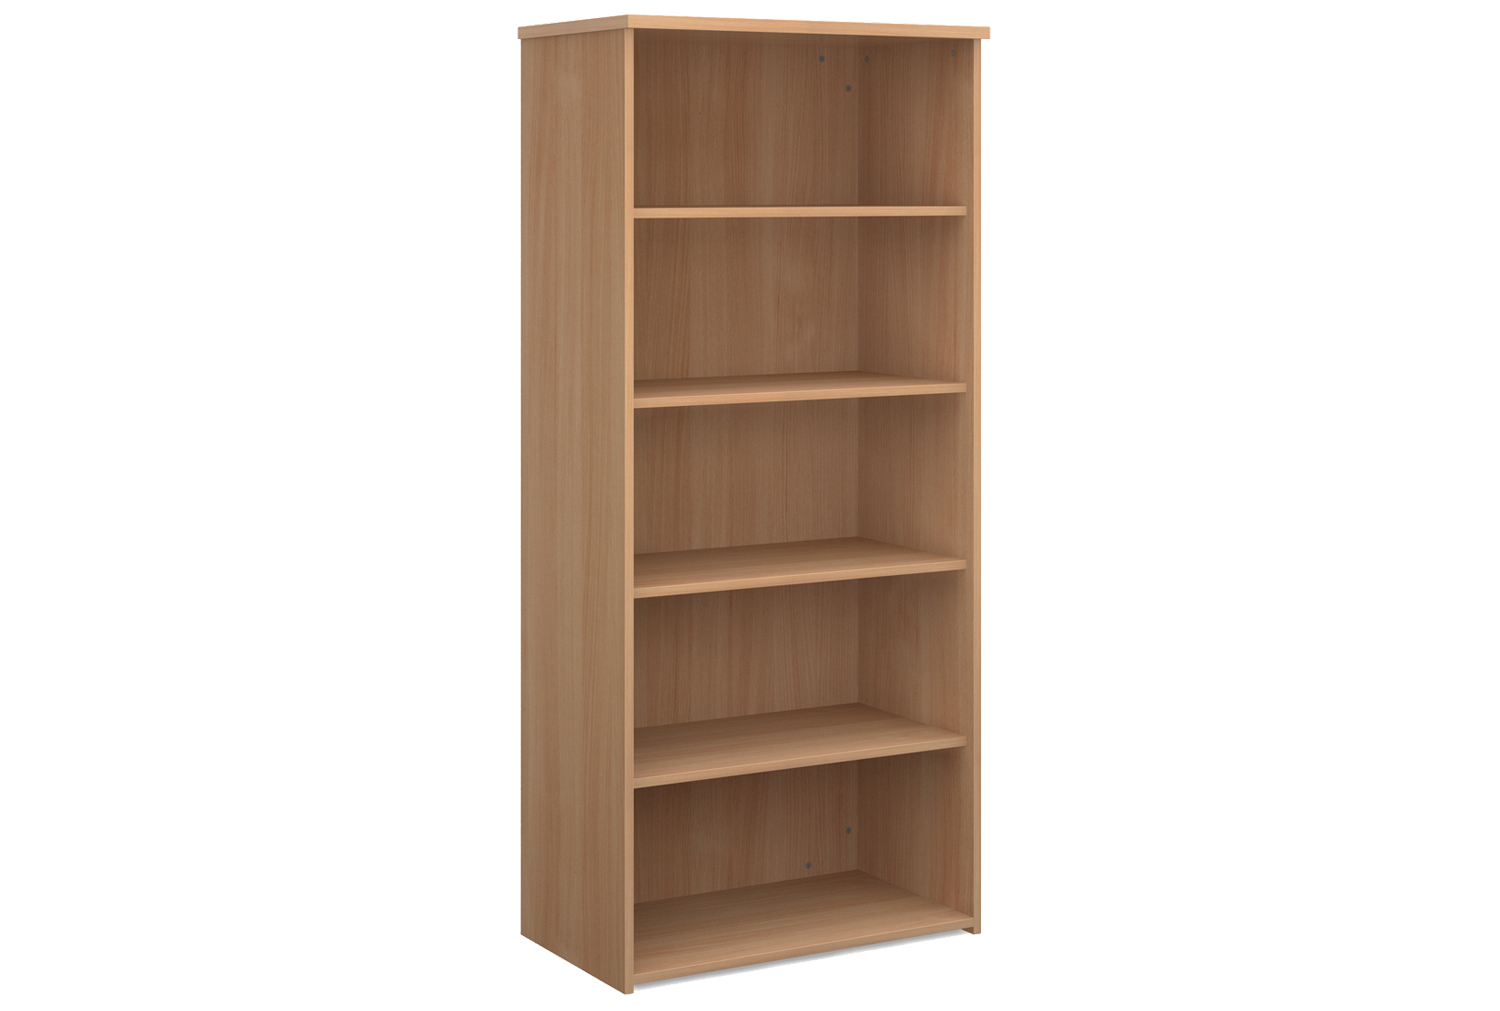 Value Line Office Bookcases, 4 Shelf - 80wx47dx179h (cm), Beech